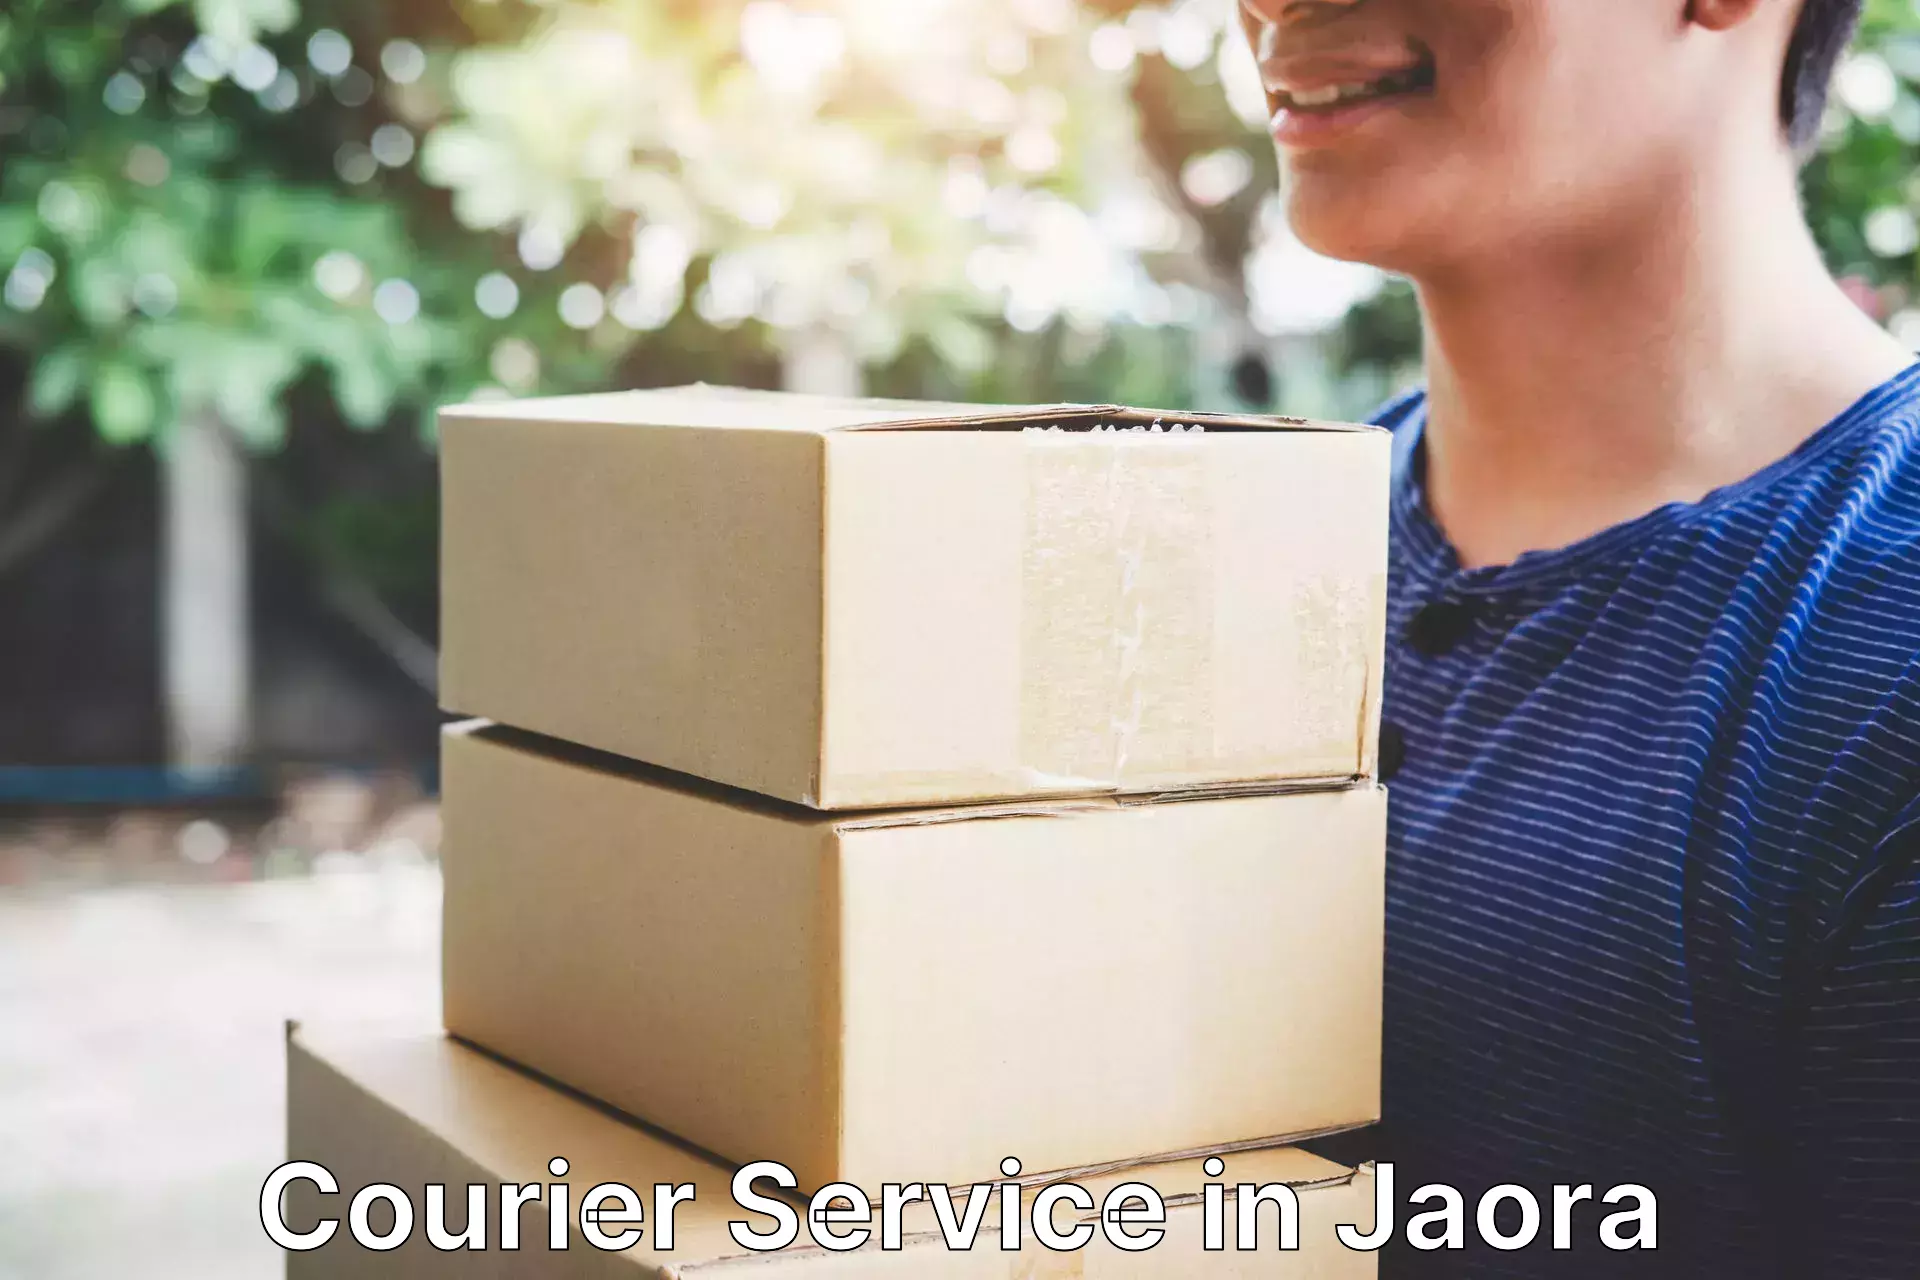 Efficient parcel delivery in Jaora